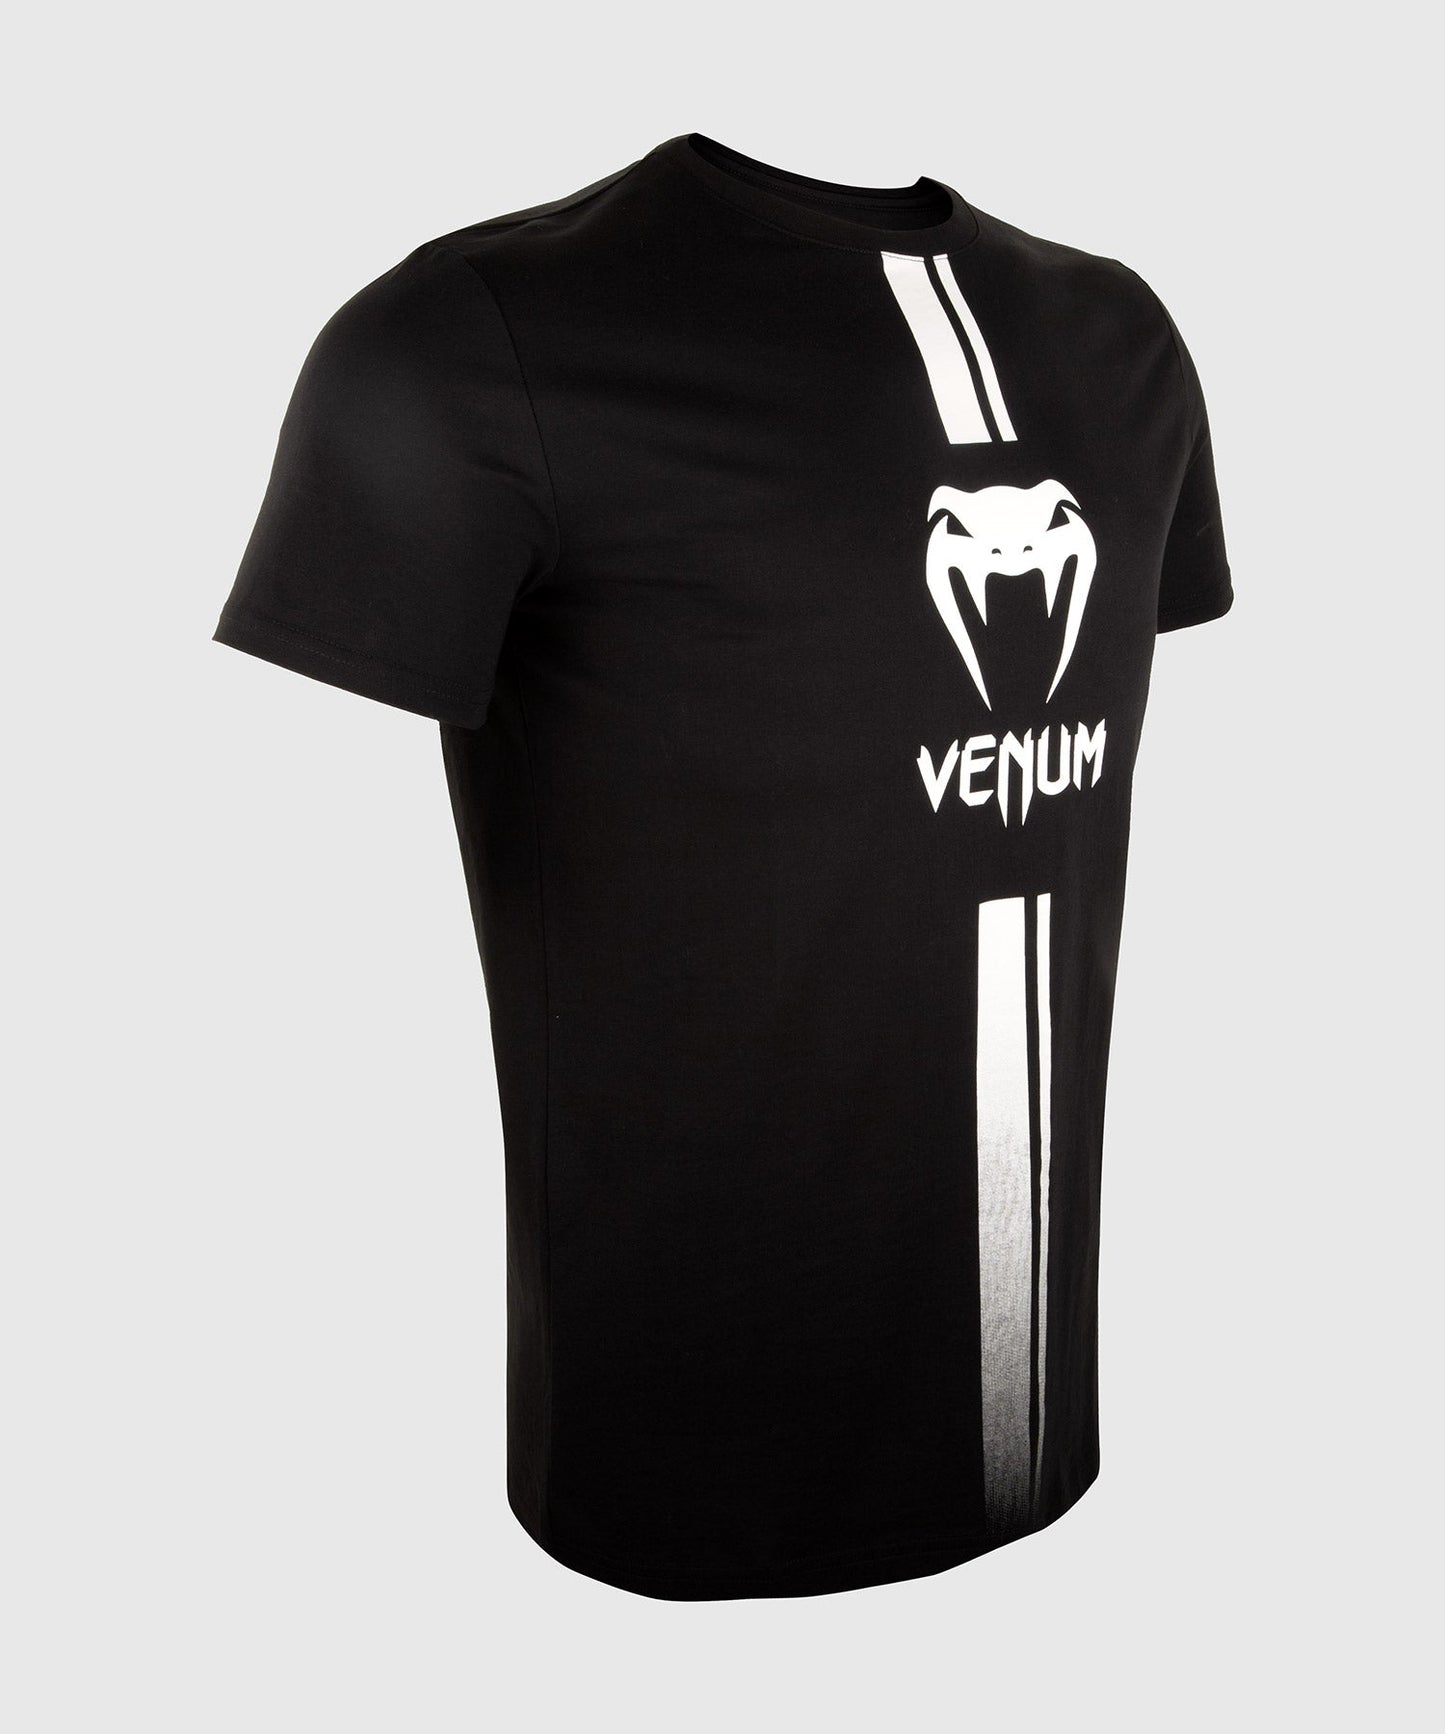 Venum Logos T-Shirt - Black/White